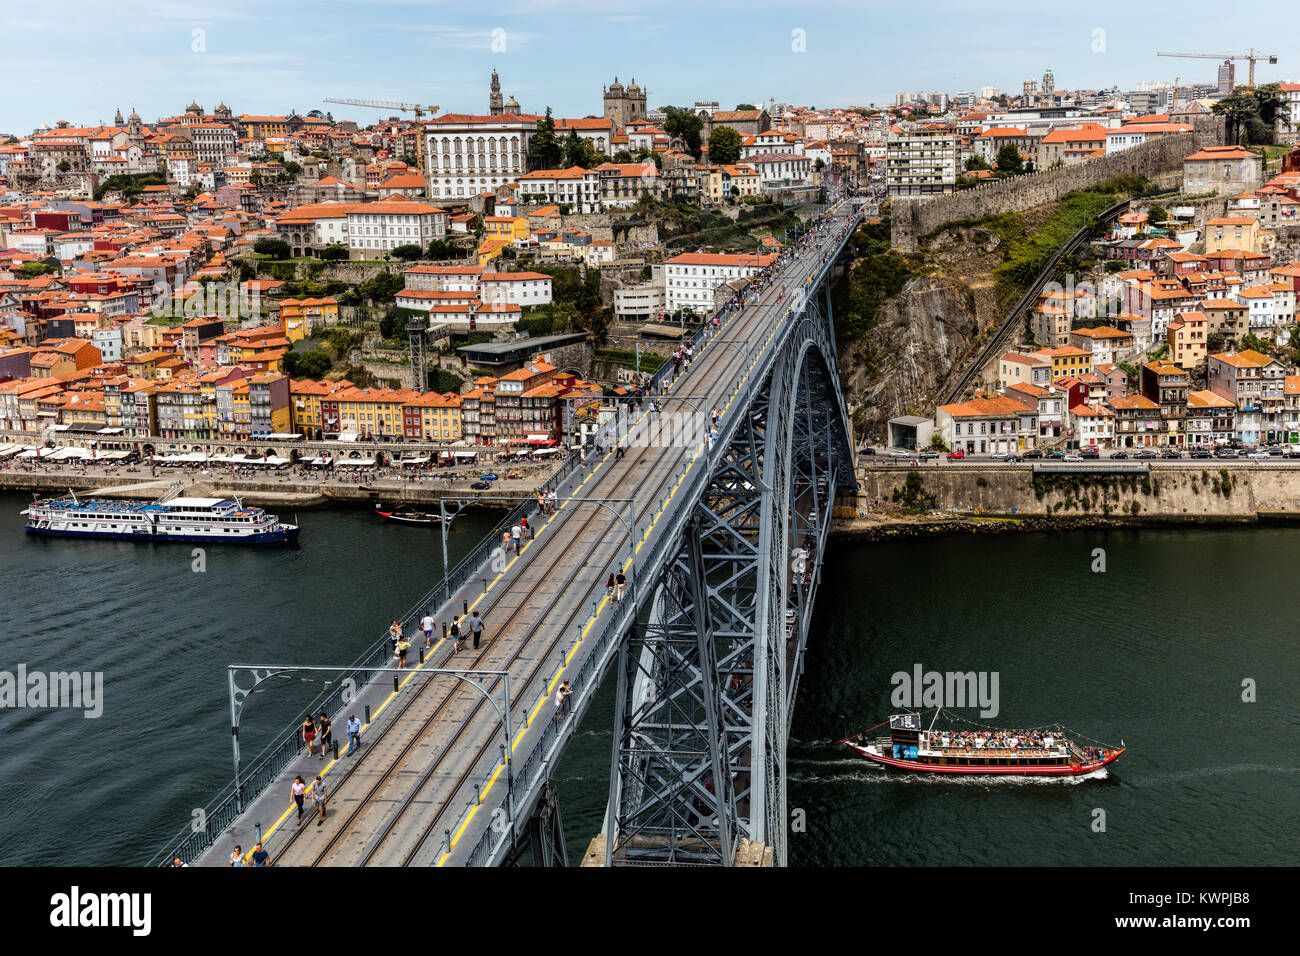 The Dom Luis I Bridge, a double-deck metal arch bridge, constructed in 1886, spans the River Douro between the cities of Porto and Vila Nova de Gaia i Stock Photo